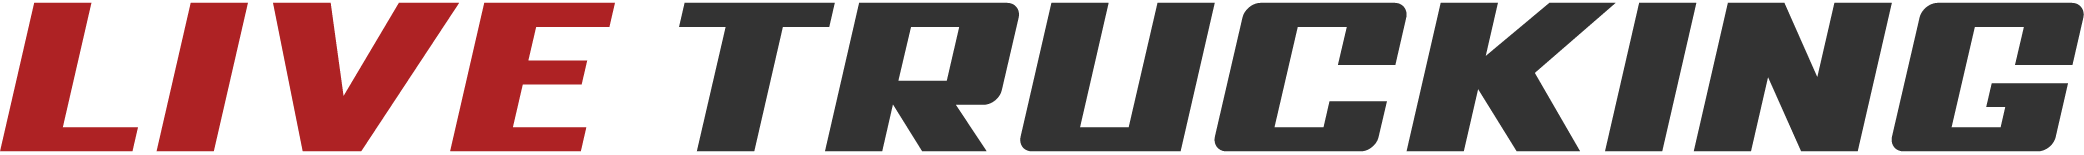 LiveTrucking logo